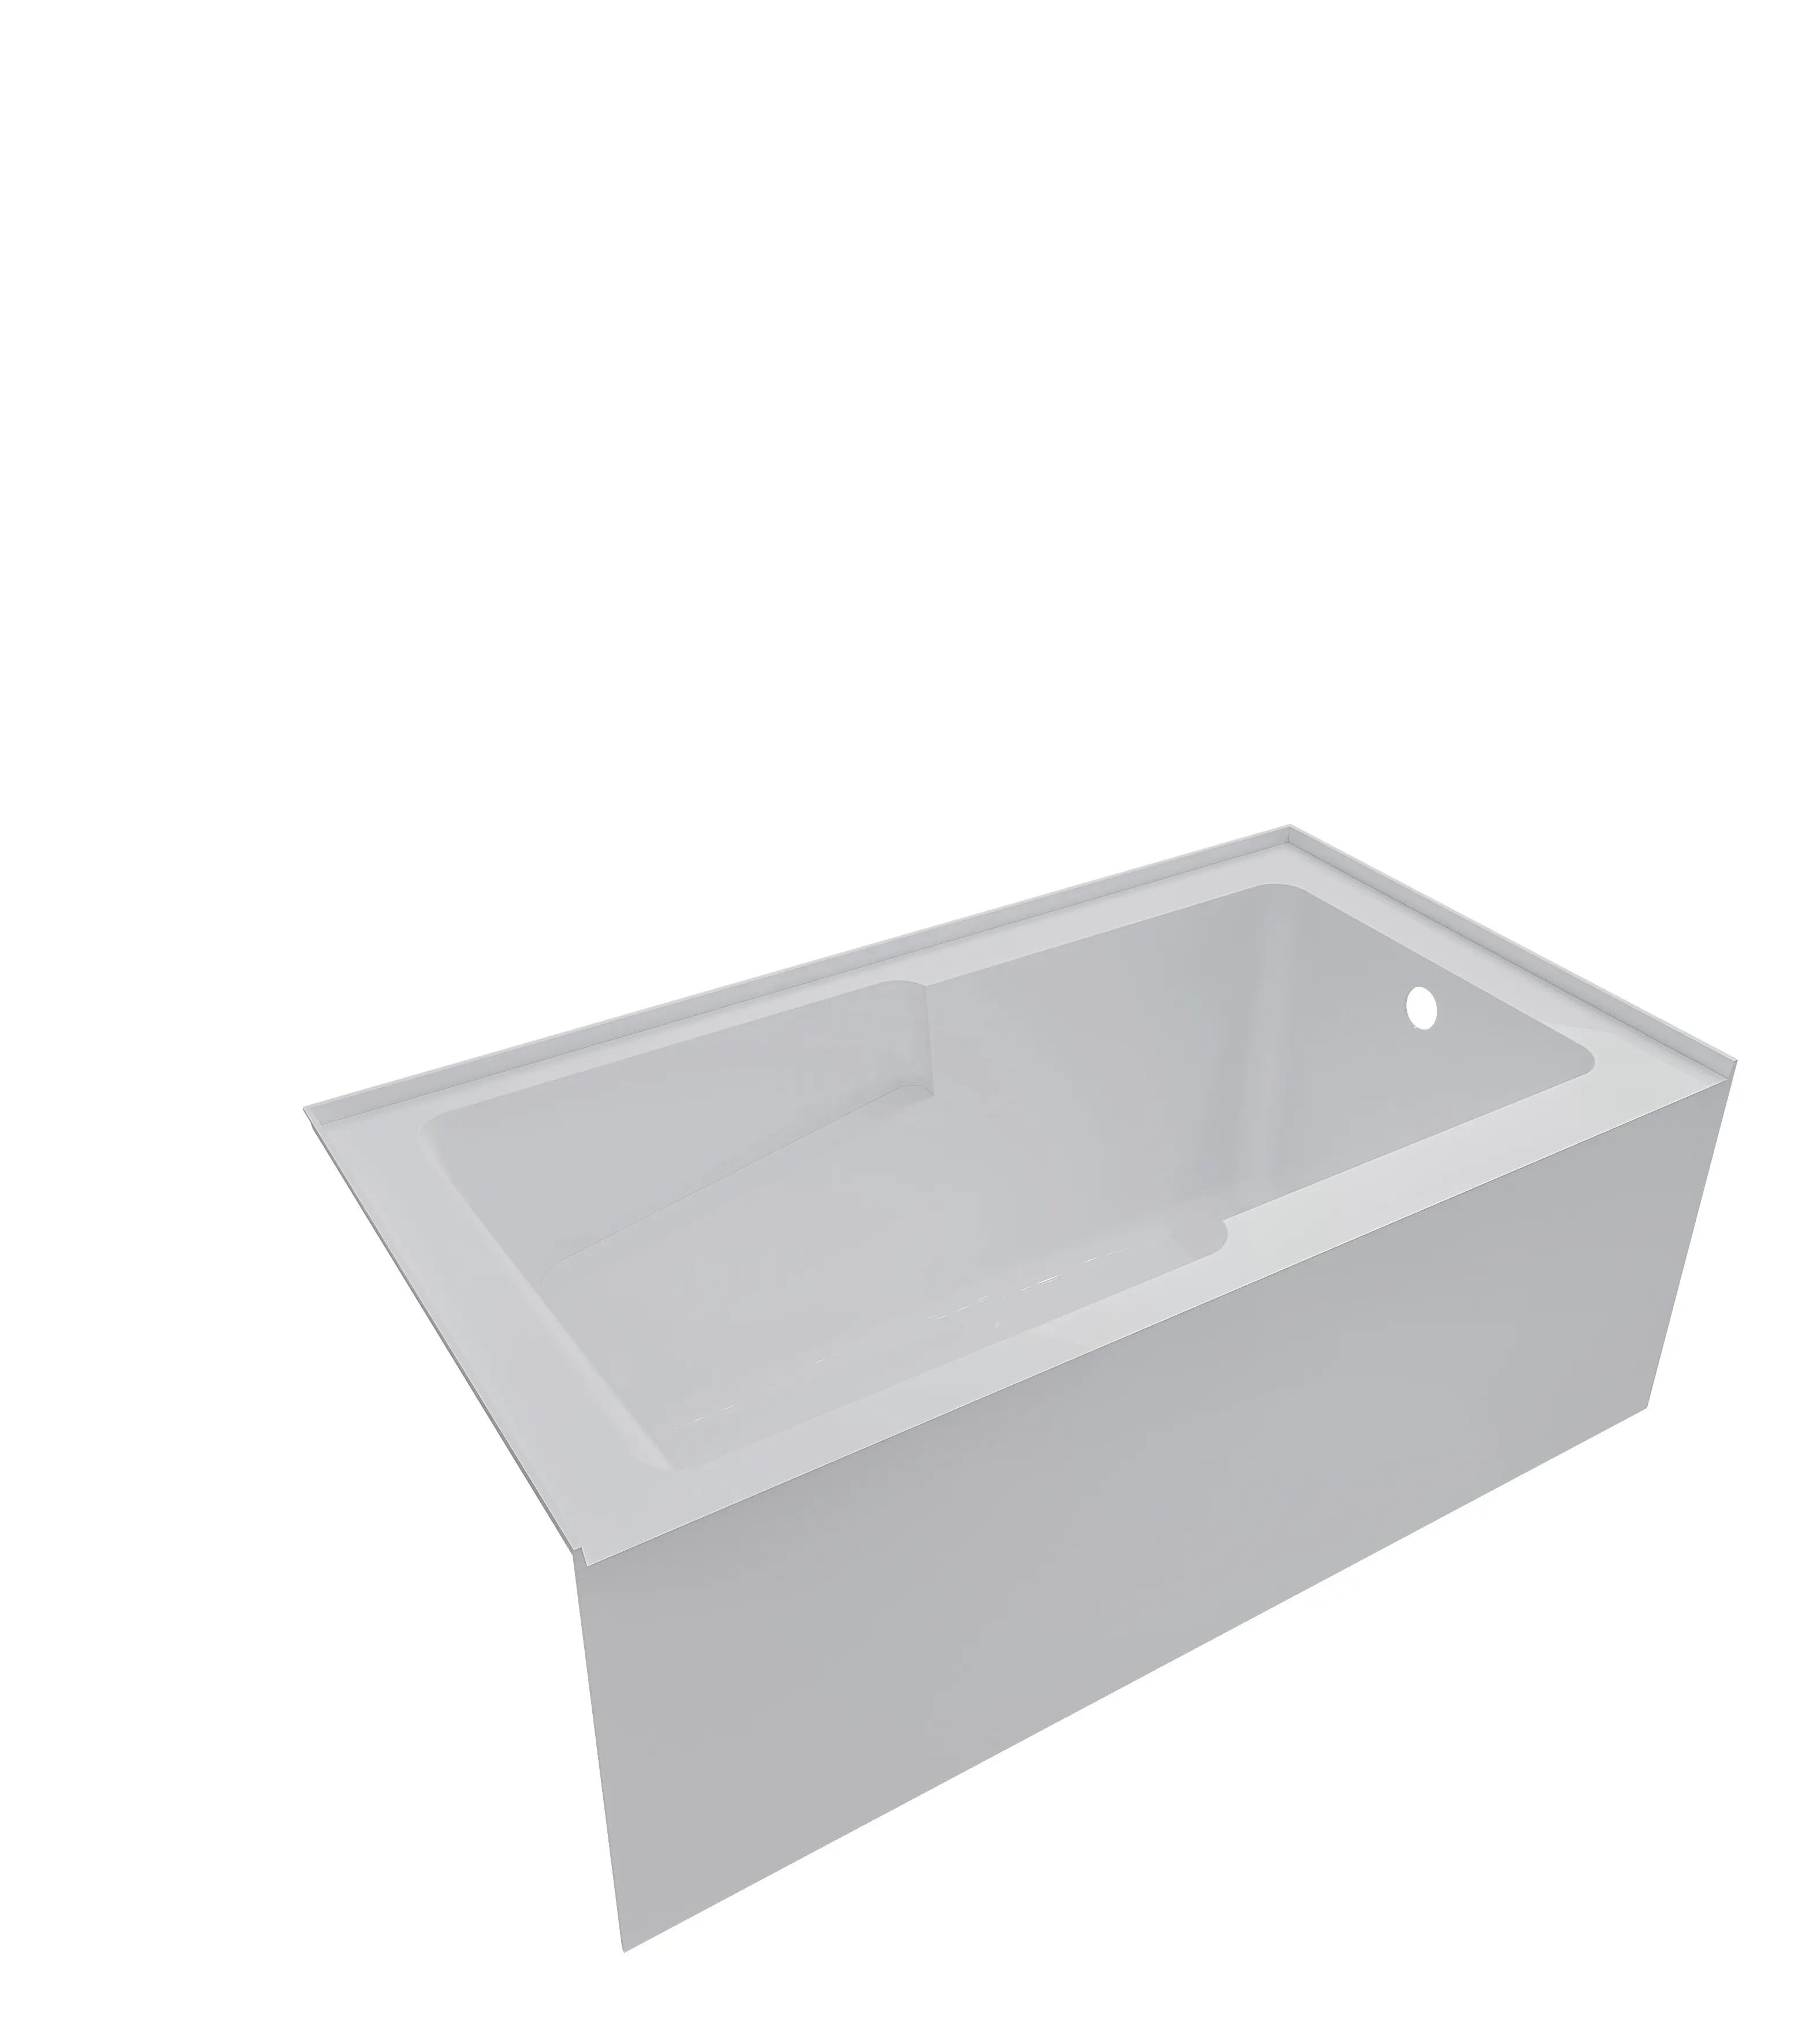 ON SALE: Acrylic Fiberglass Reinforced CE/cUPC Approved 60" Alcove Apron Skirted Soaking Bathtub